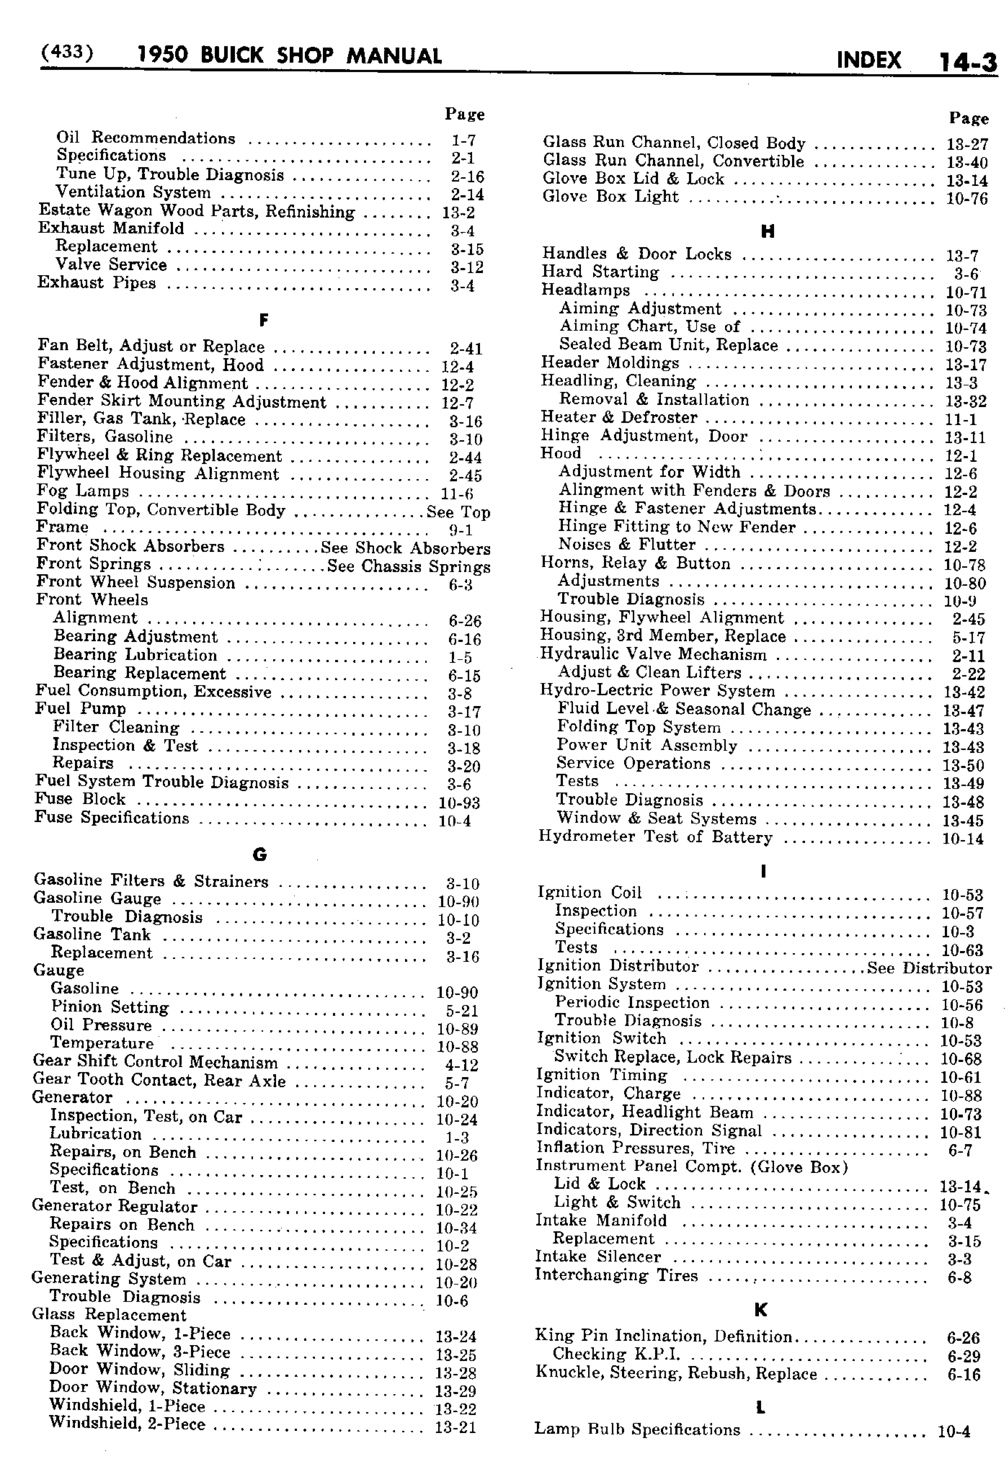 n_15 1950 Buick Shop Manual - Index-003-003.jpg